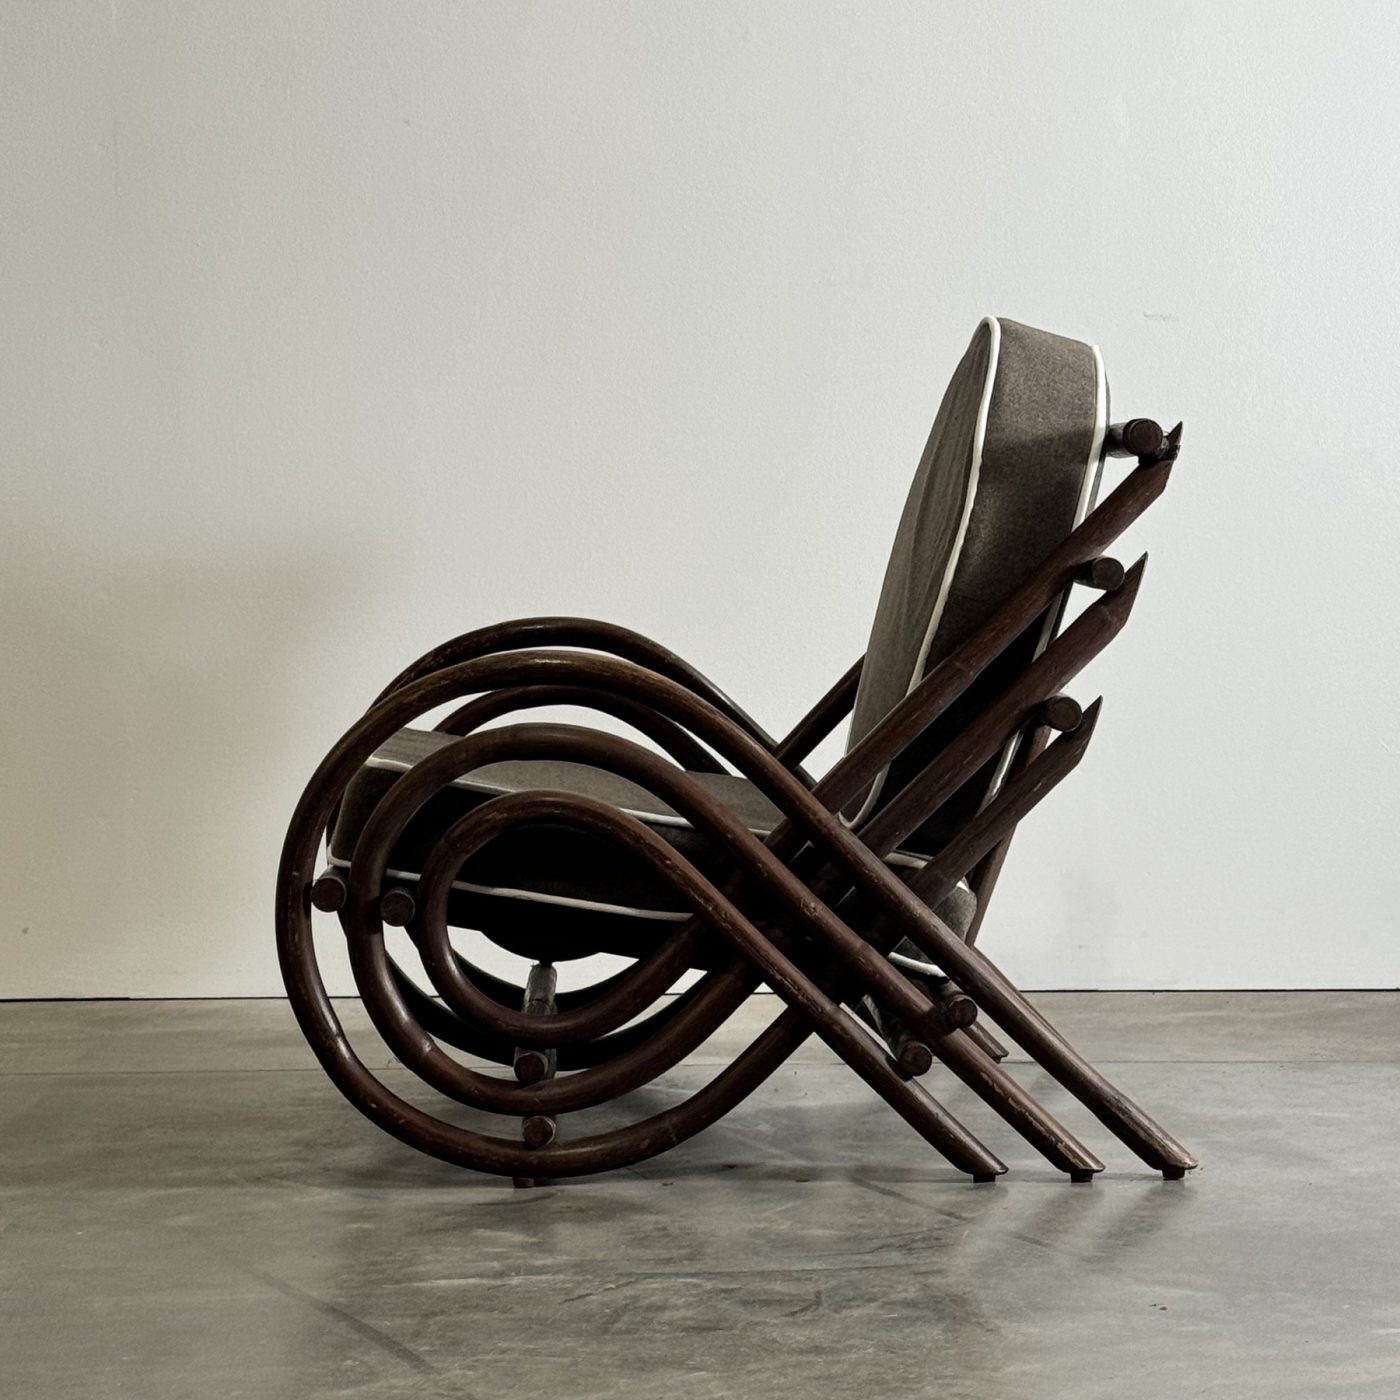 objet-vagabond-rattan-armchairs0000